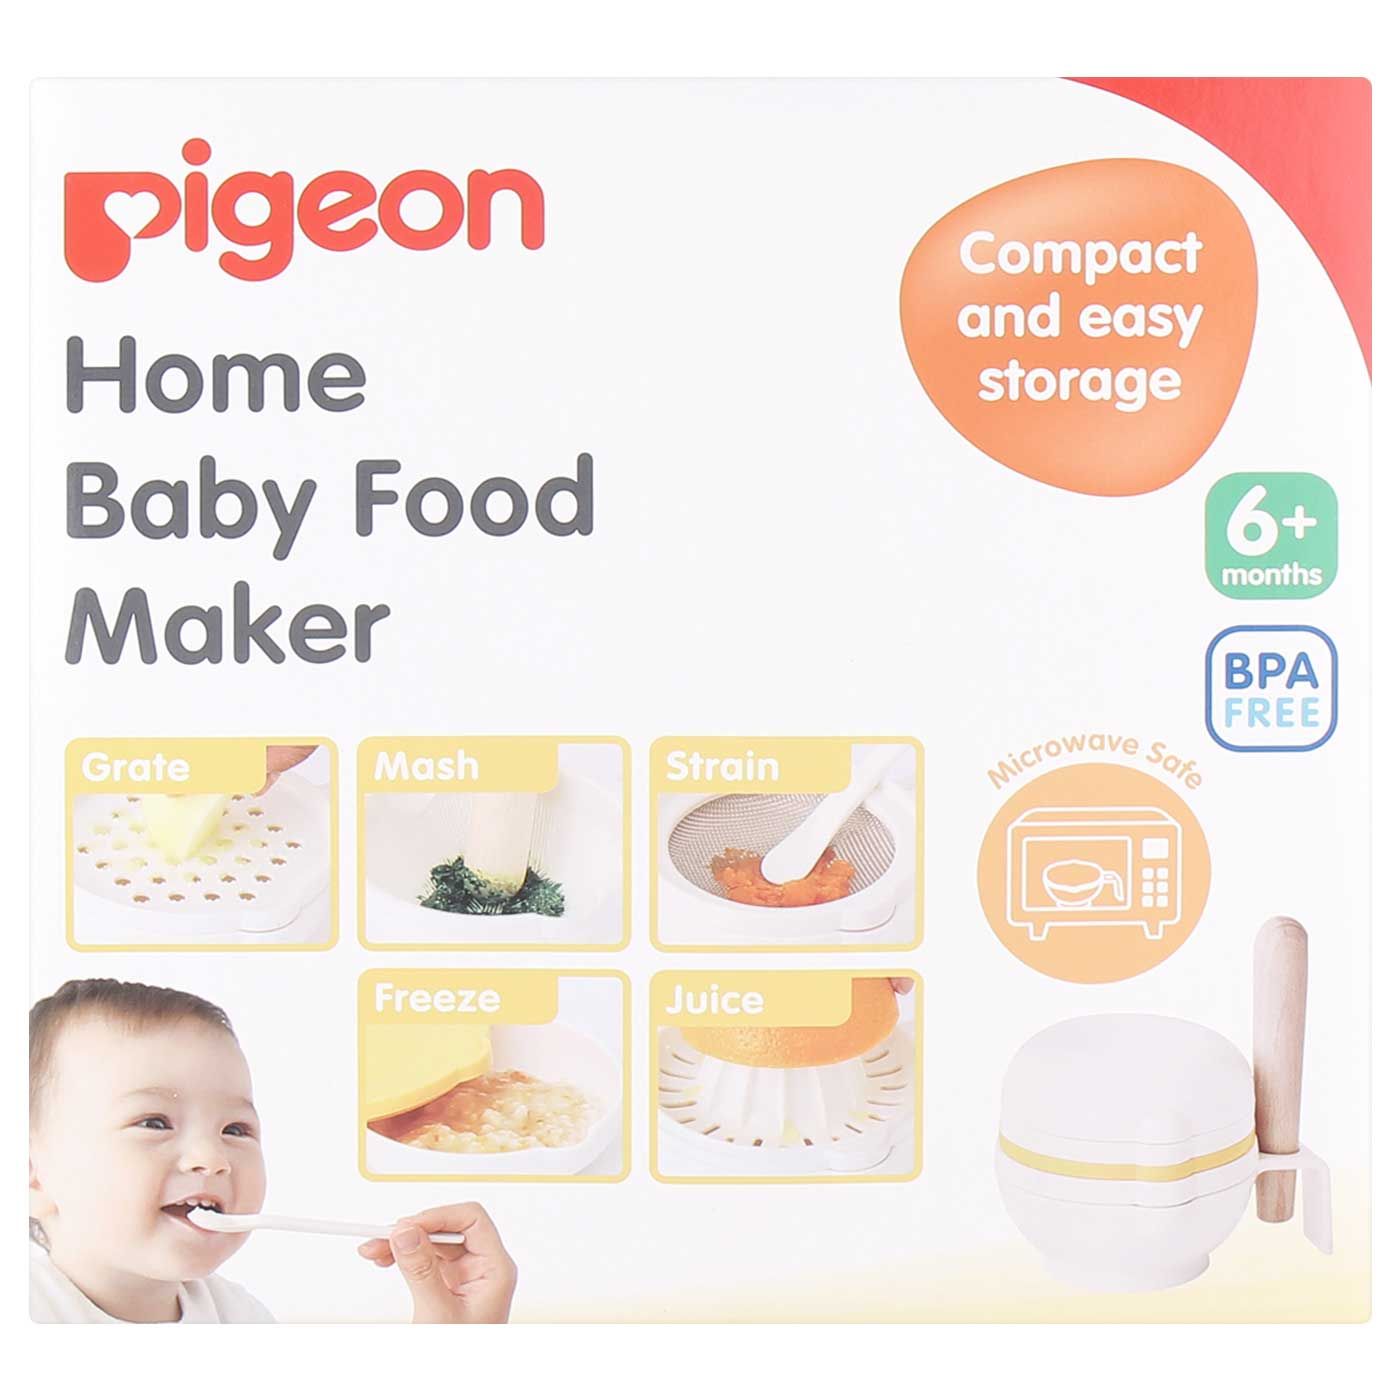 Pigeon Home Baby Food Maker - 1